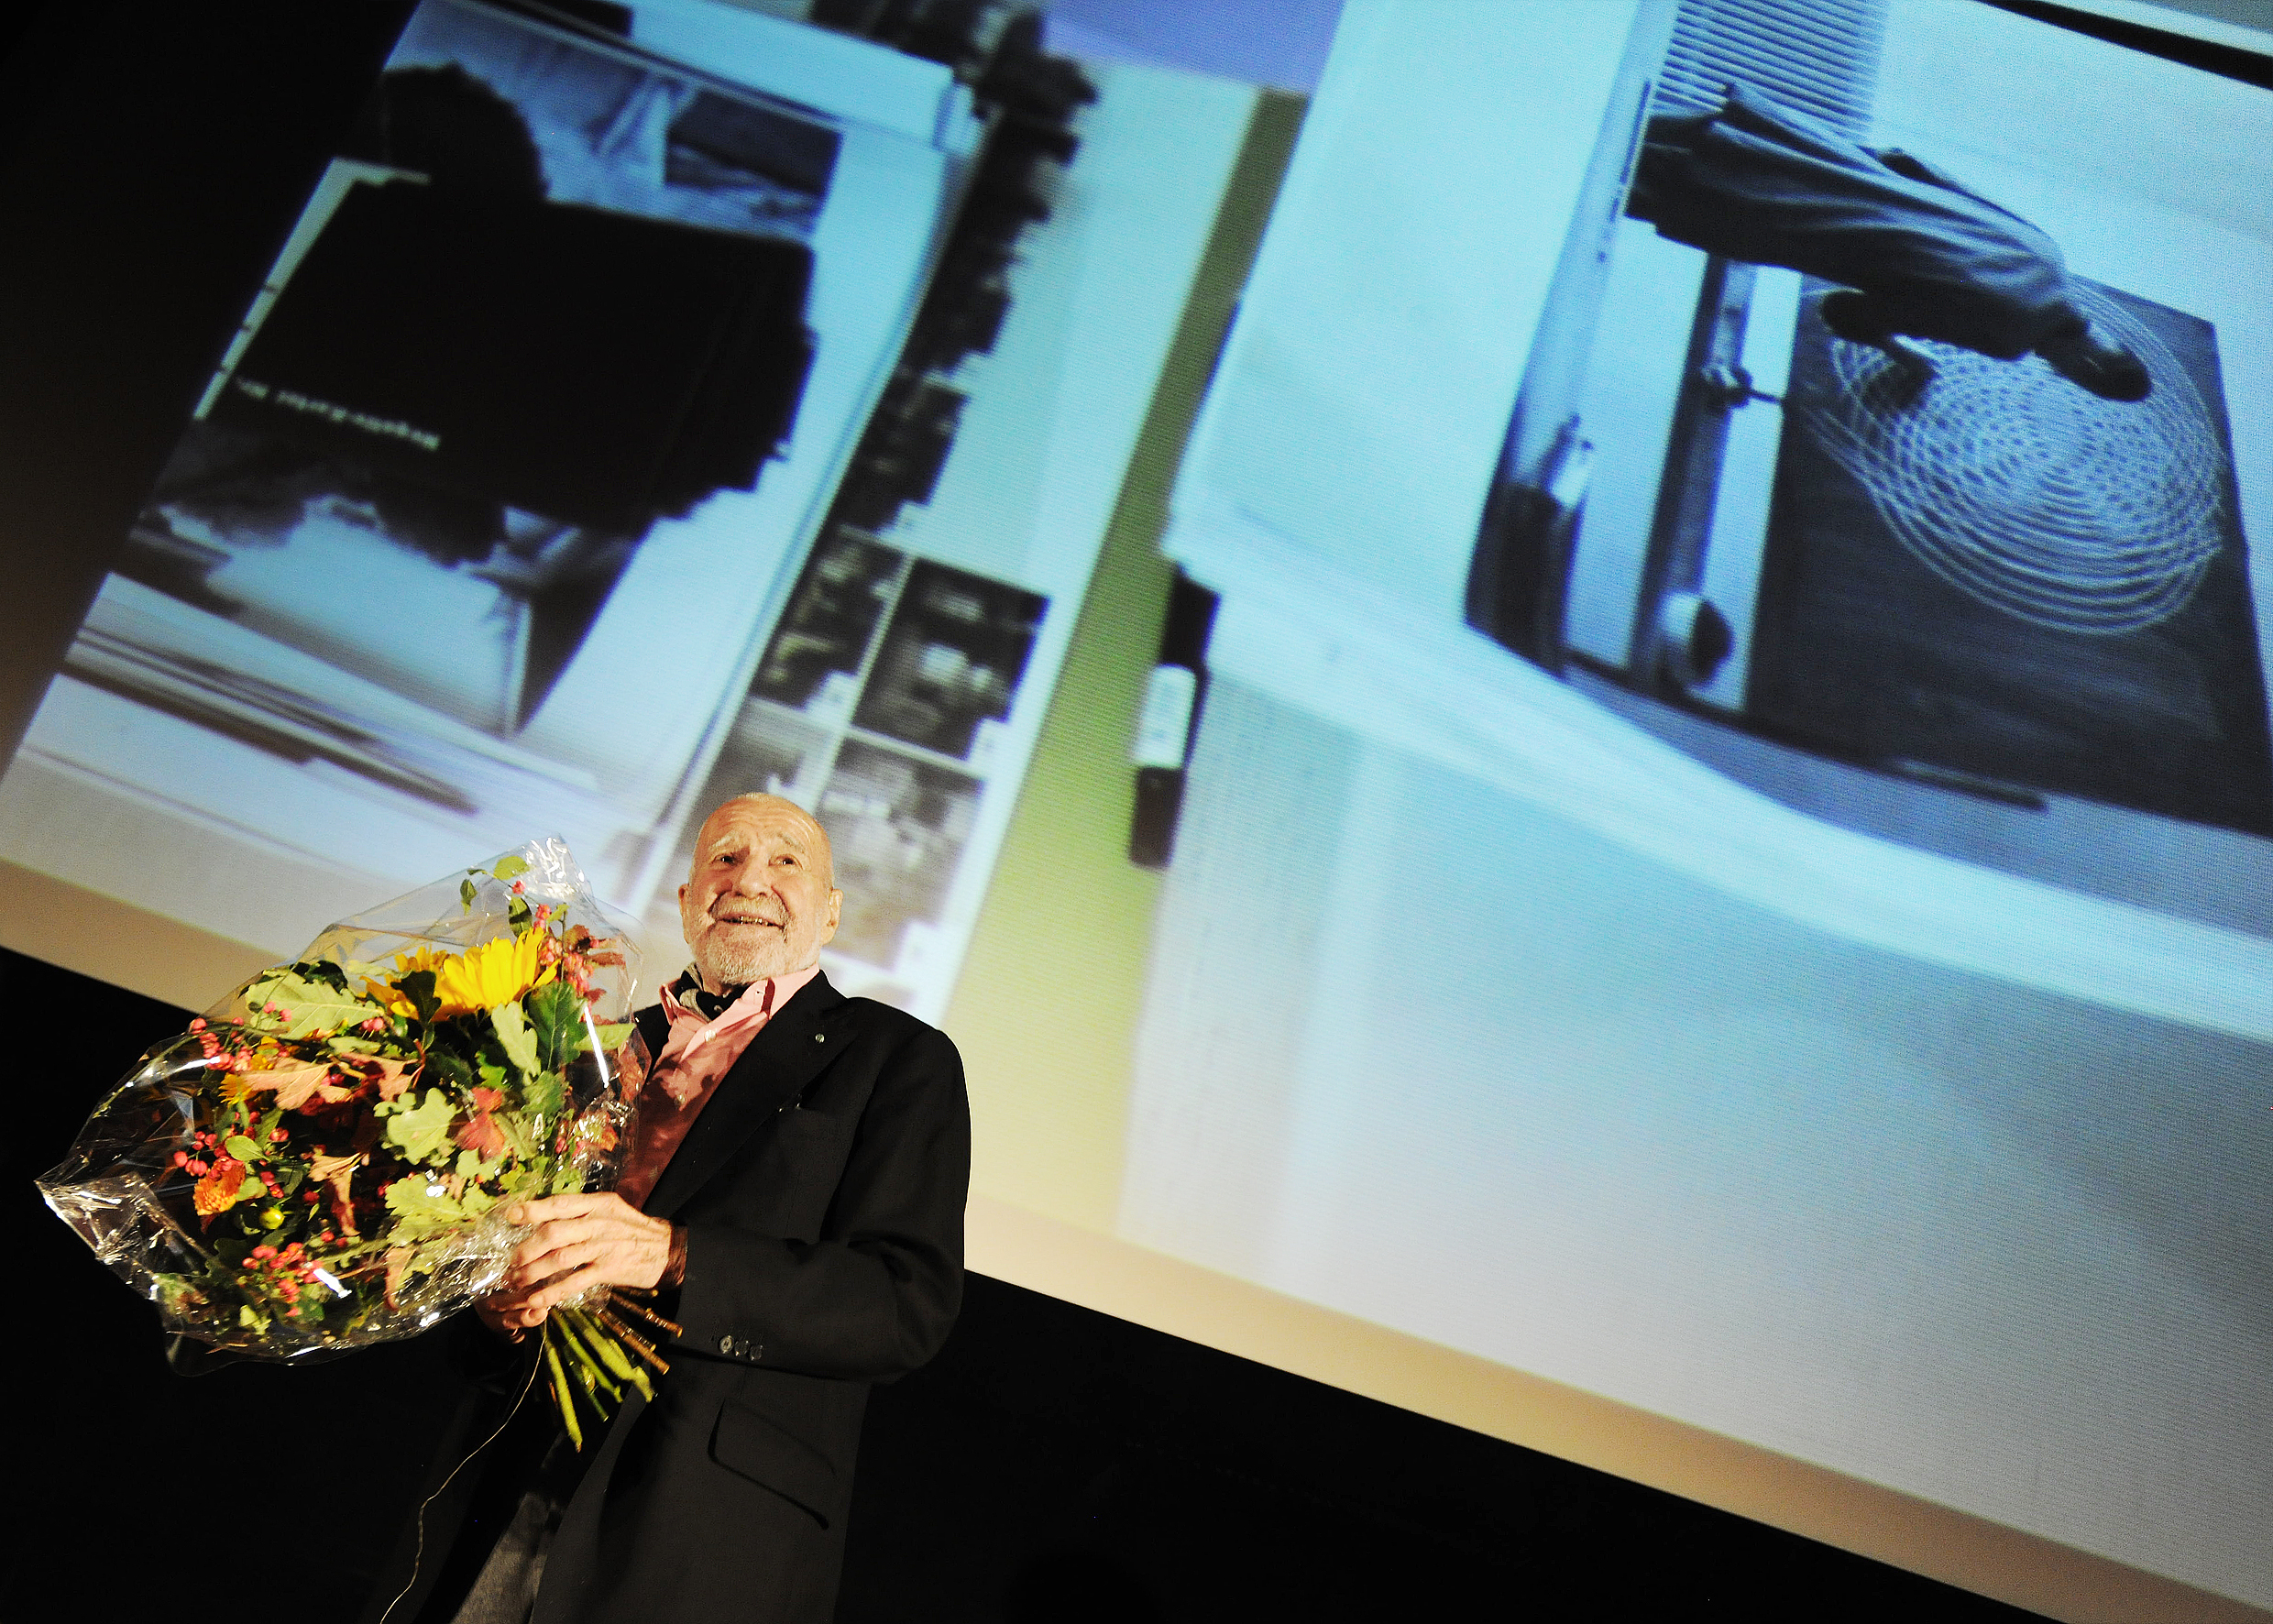 Preisverleihung im Cinéma Capitole Lausanne : Ernst Scheidegger, Grand Prix Design 2011